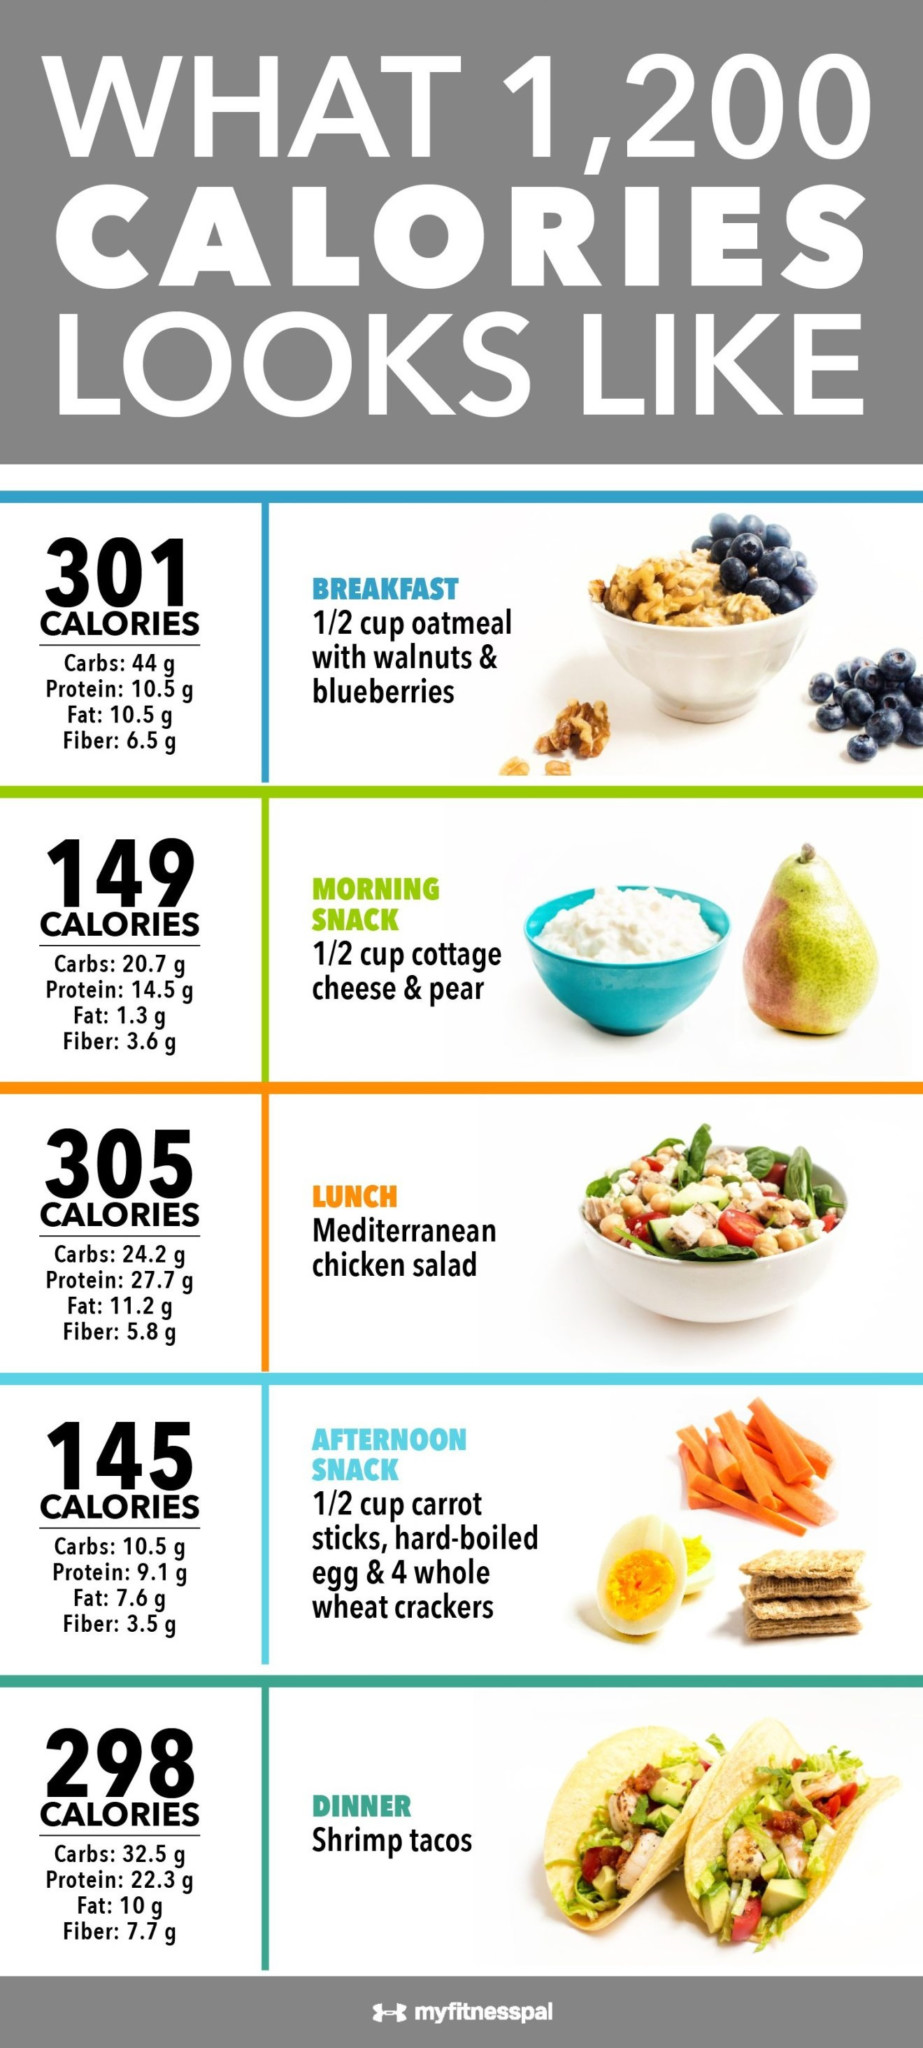 dr-nowzaradan-diet-plan-1200-calories-printabledietplan